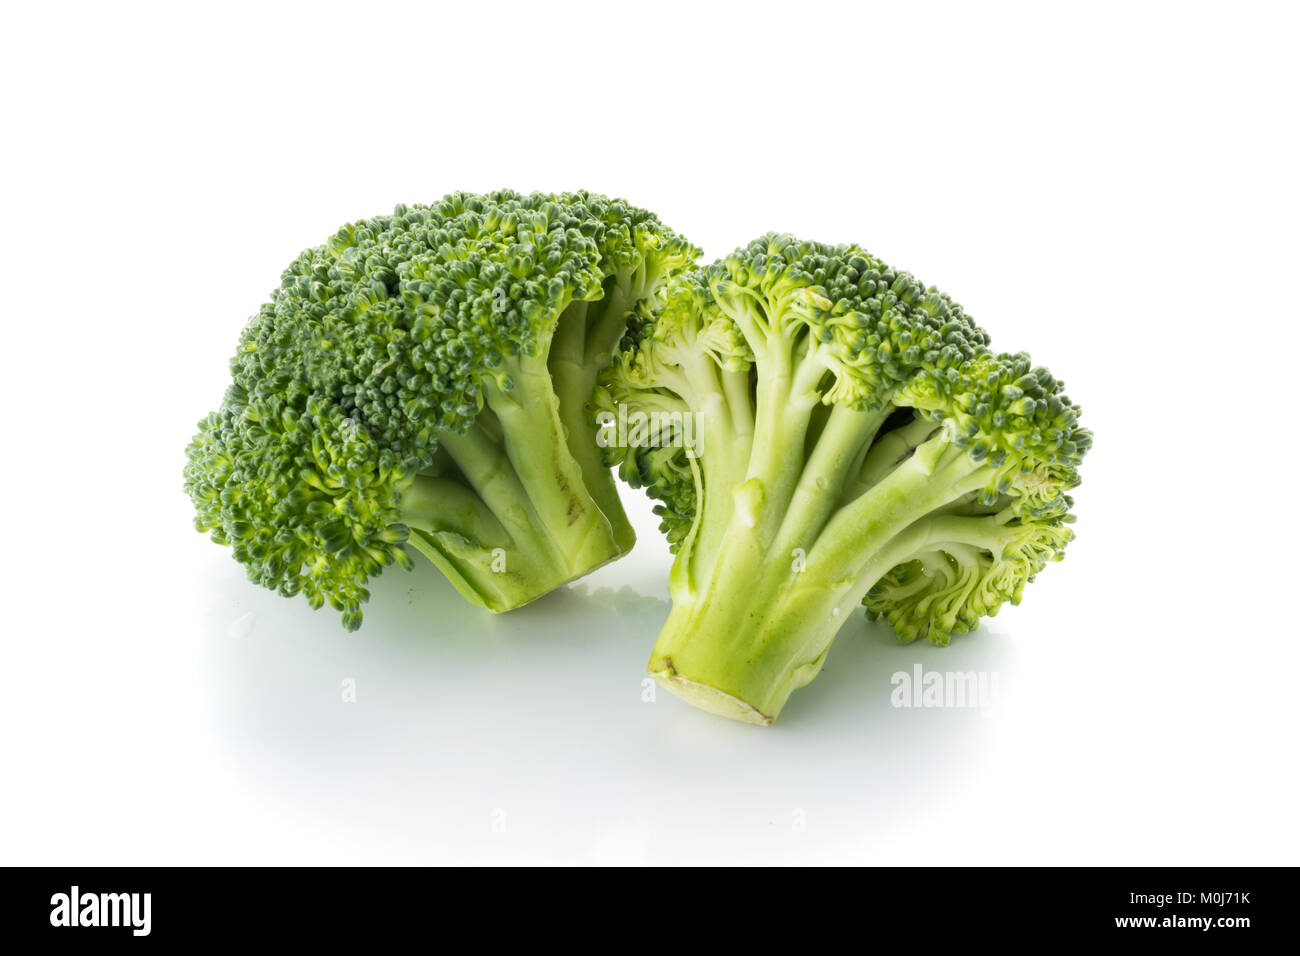 Ripe Broccoli Cabbage Isolated on White Stock Photo